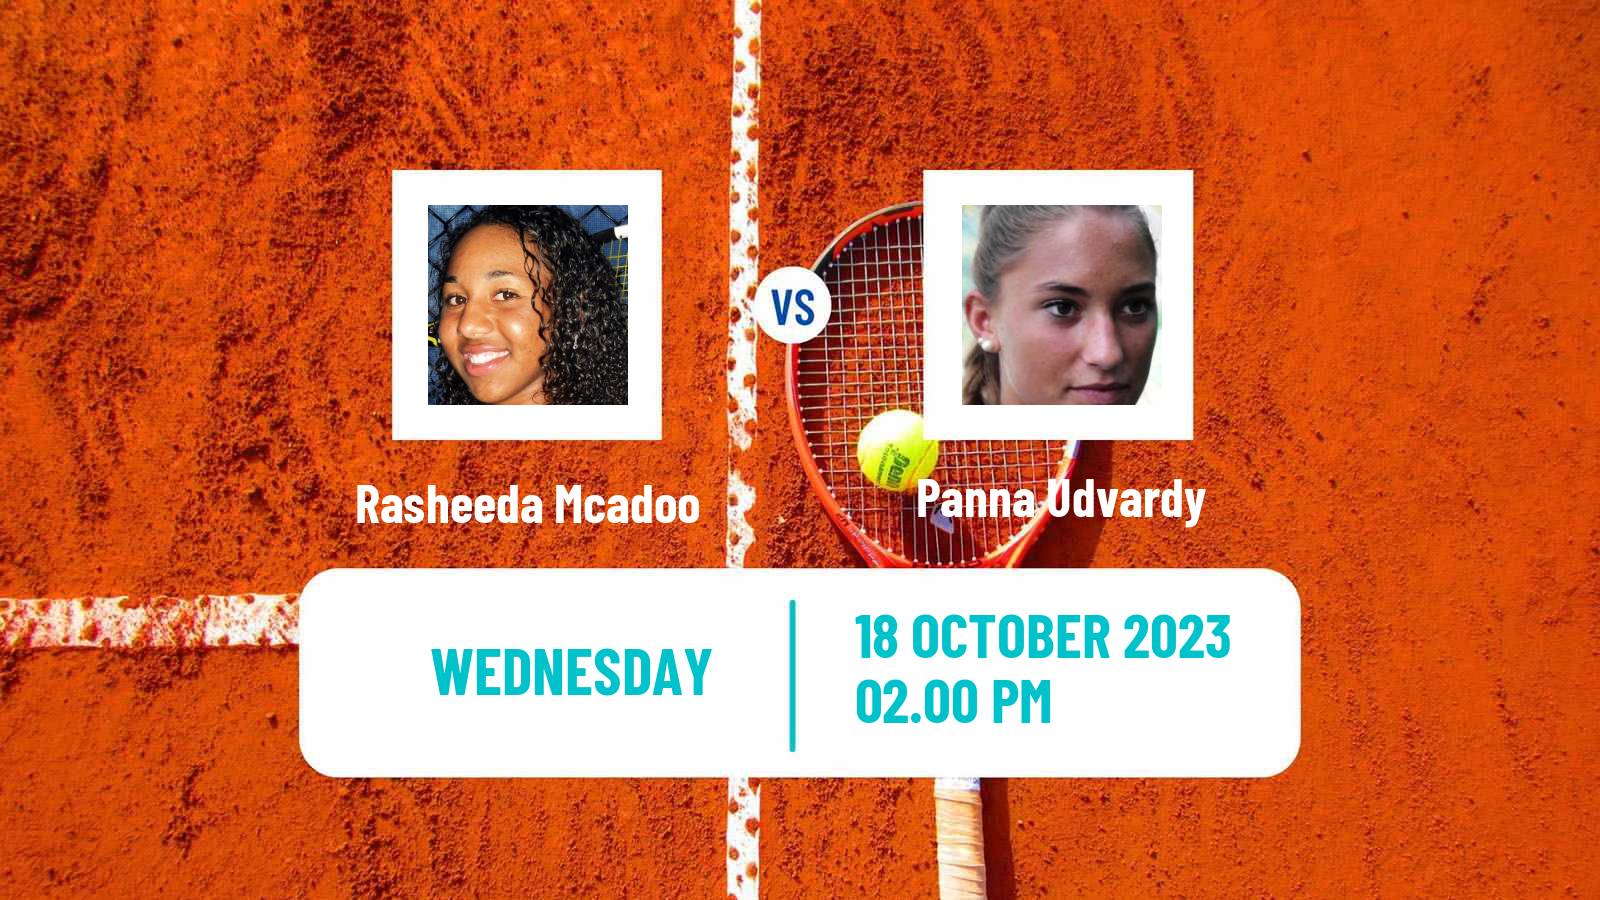 Tennis ITF W80 Macon Ga Women Rasheeda Mcadoo - Panna Udvardy